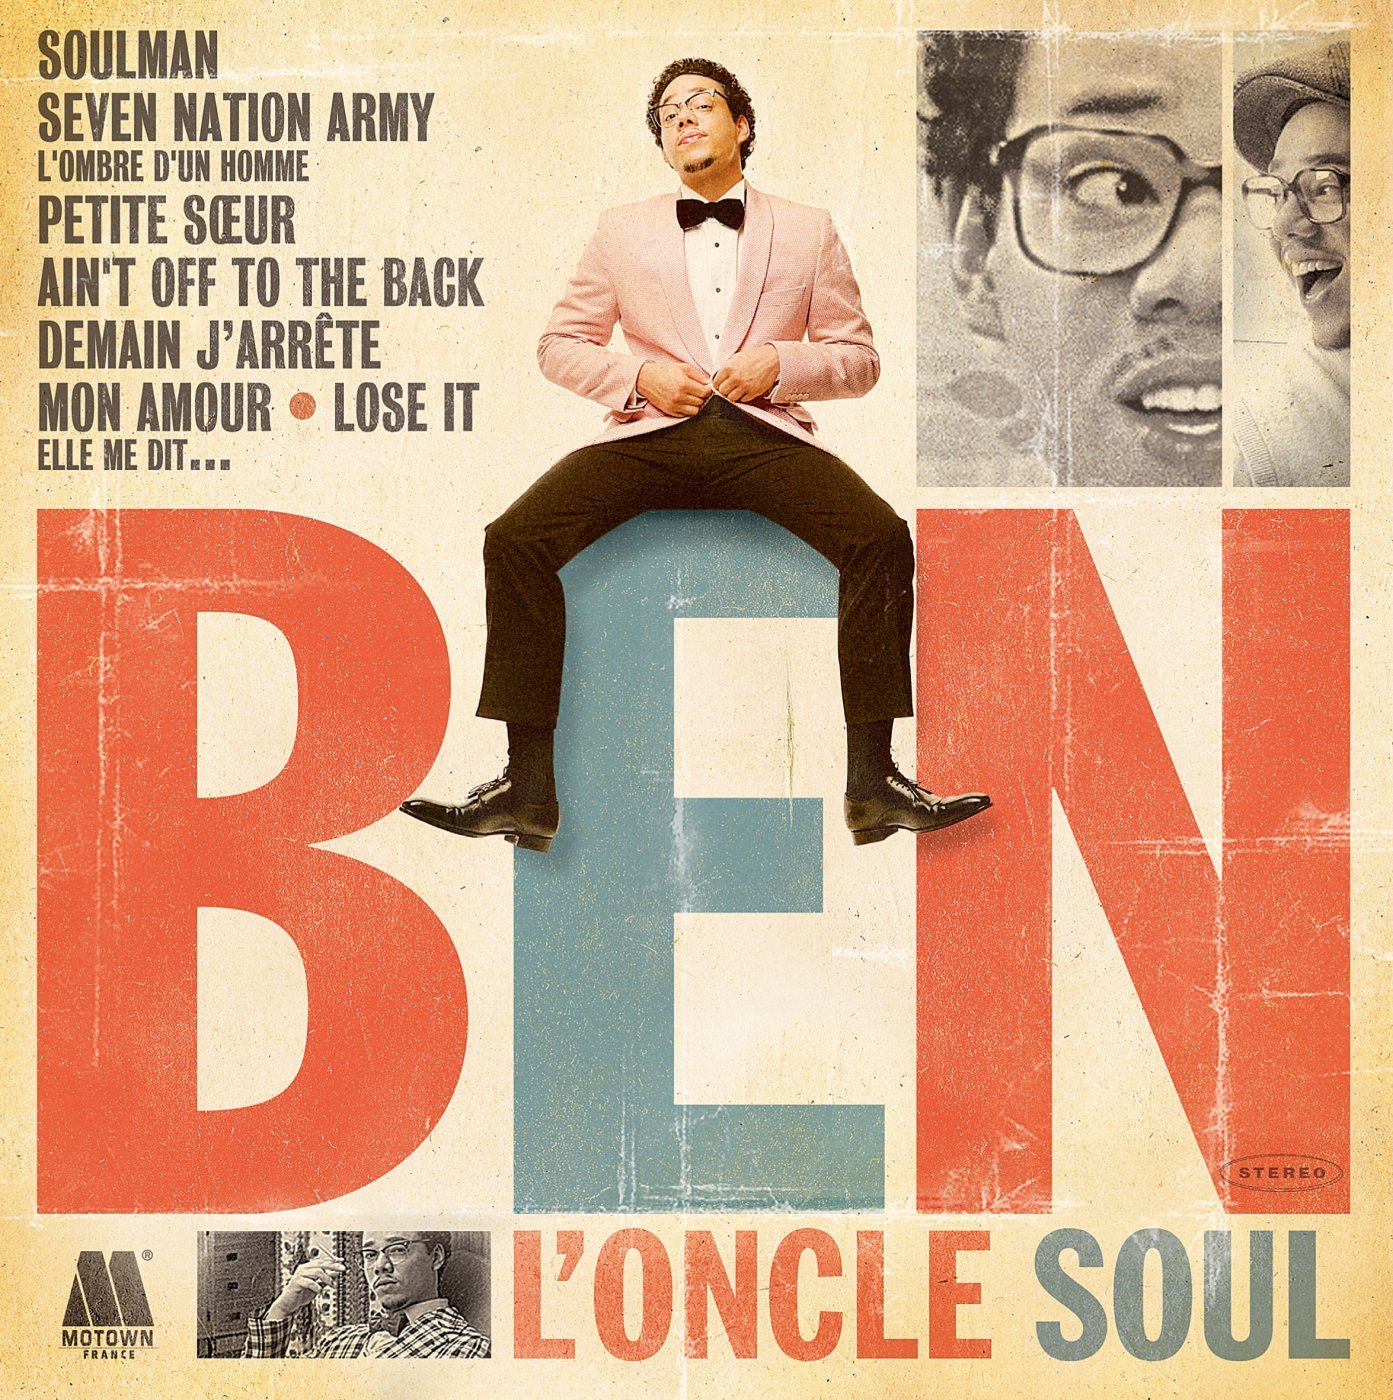 BEN I'ONCLE SOUL - Ben l'Oncle Soul cover 